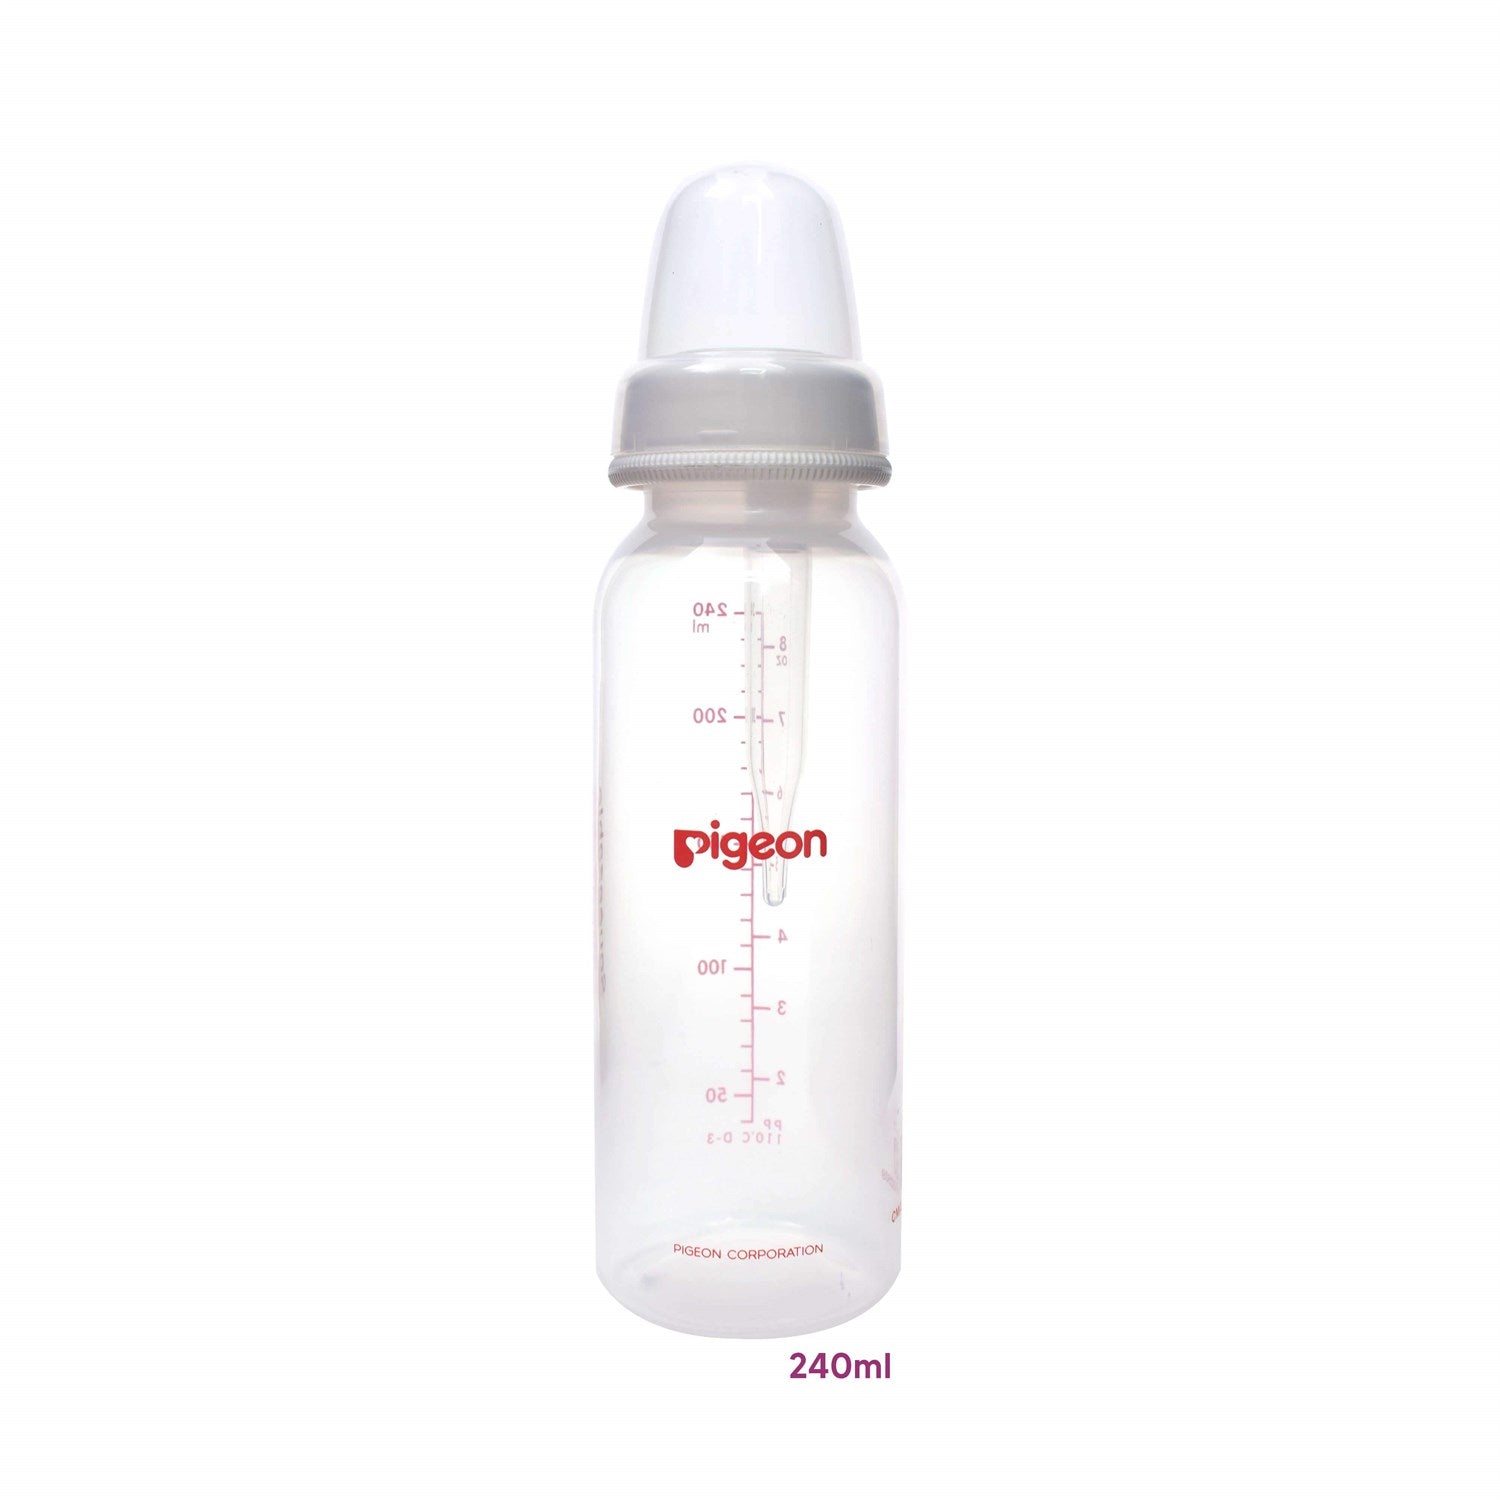 PIGEON Cleft Palate Feeding Bottle Round Base Adjustable Milk Flow - 240ml